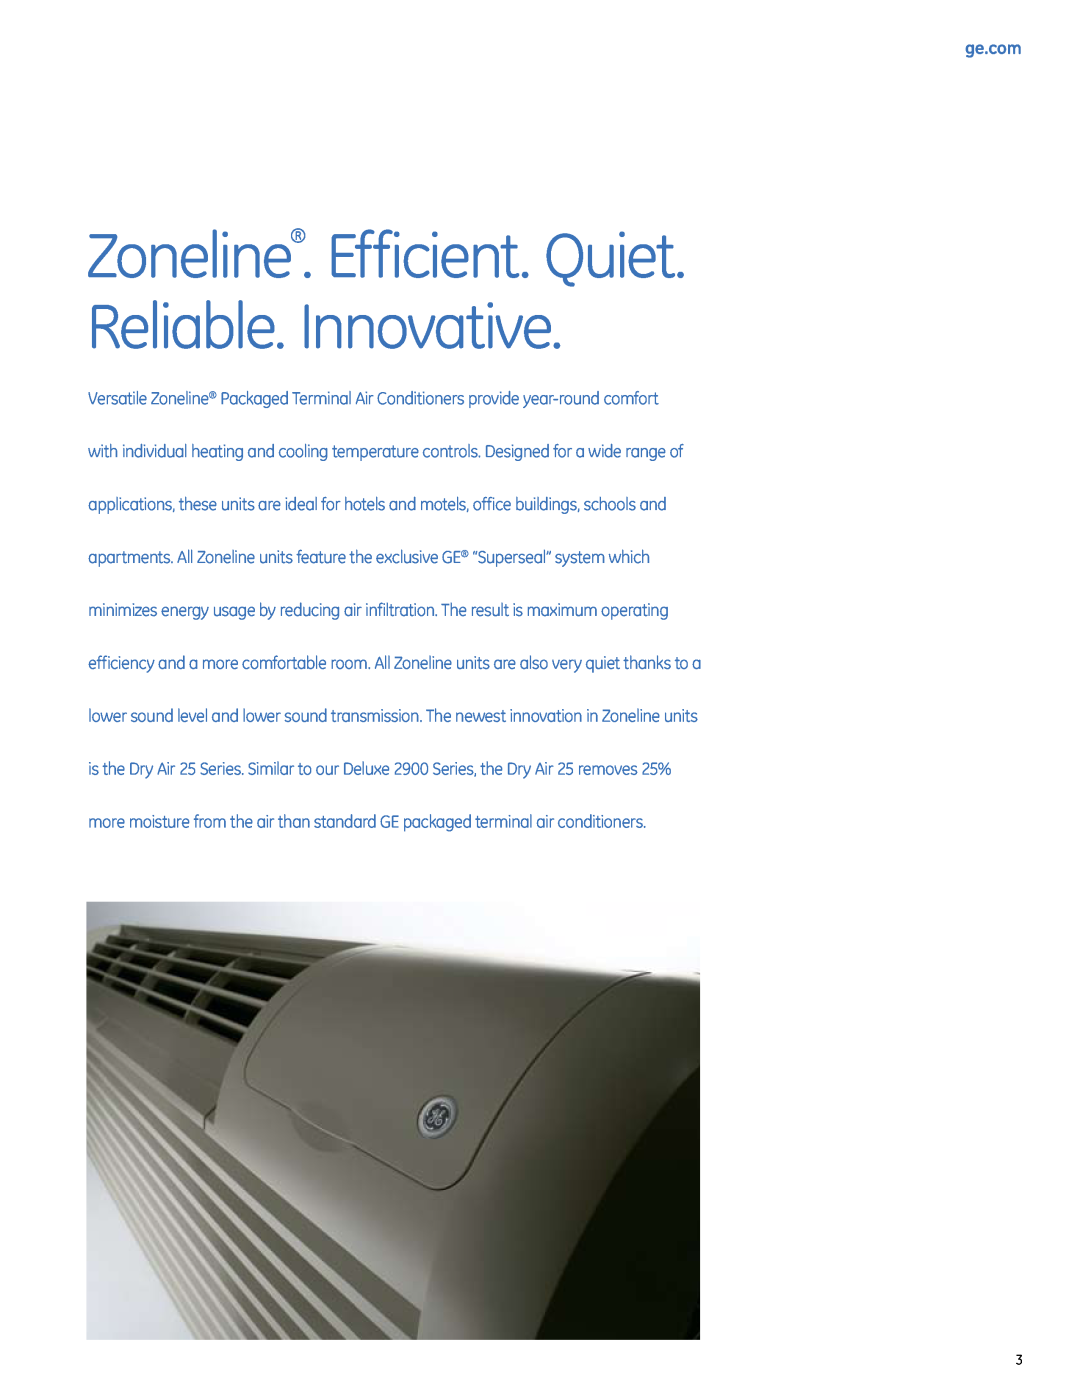 GE PDW9880J manual Zoneline. Efficient. Quiet Reliable. Innovative 